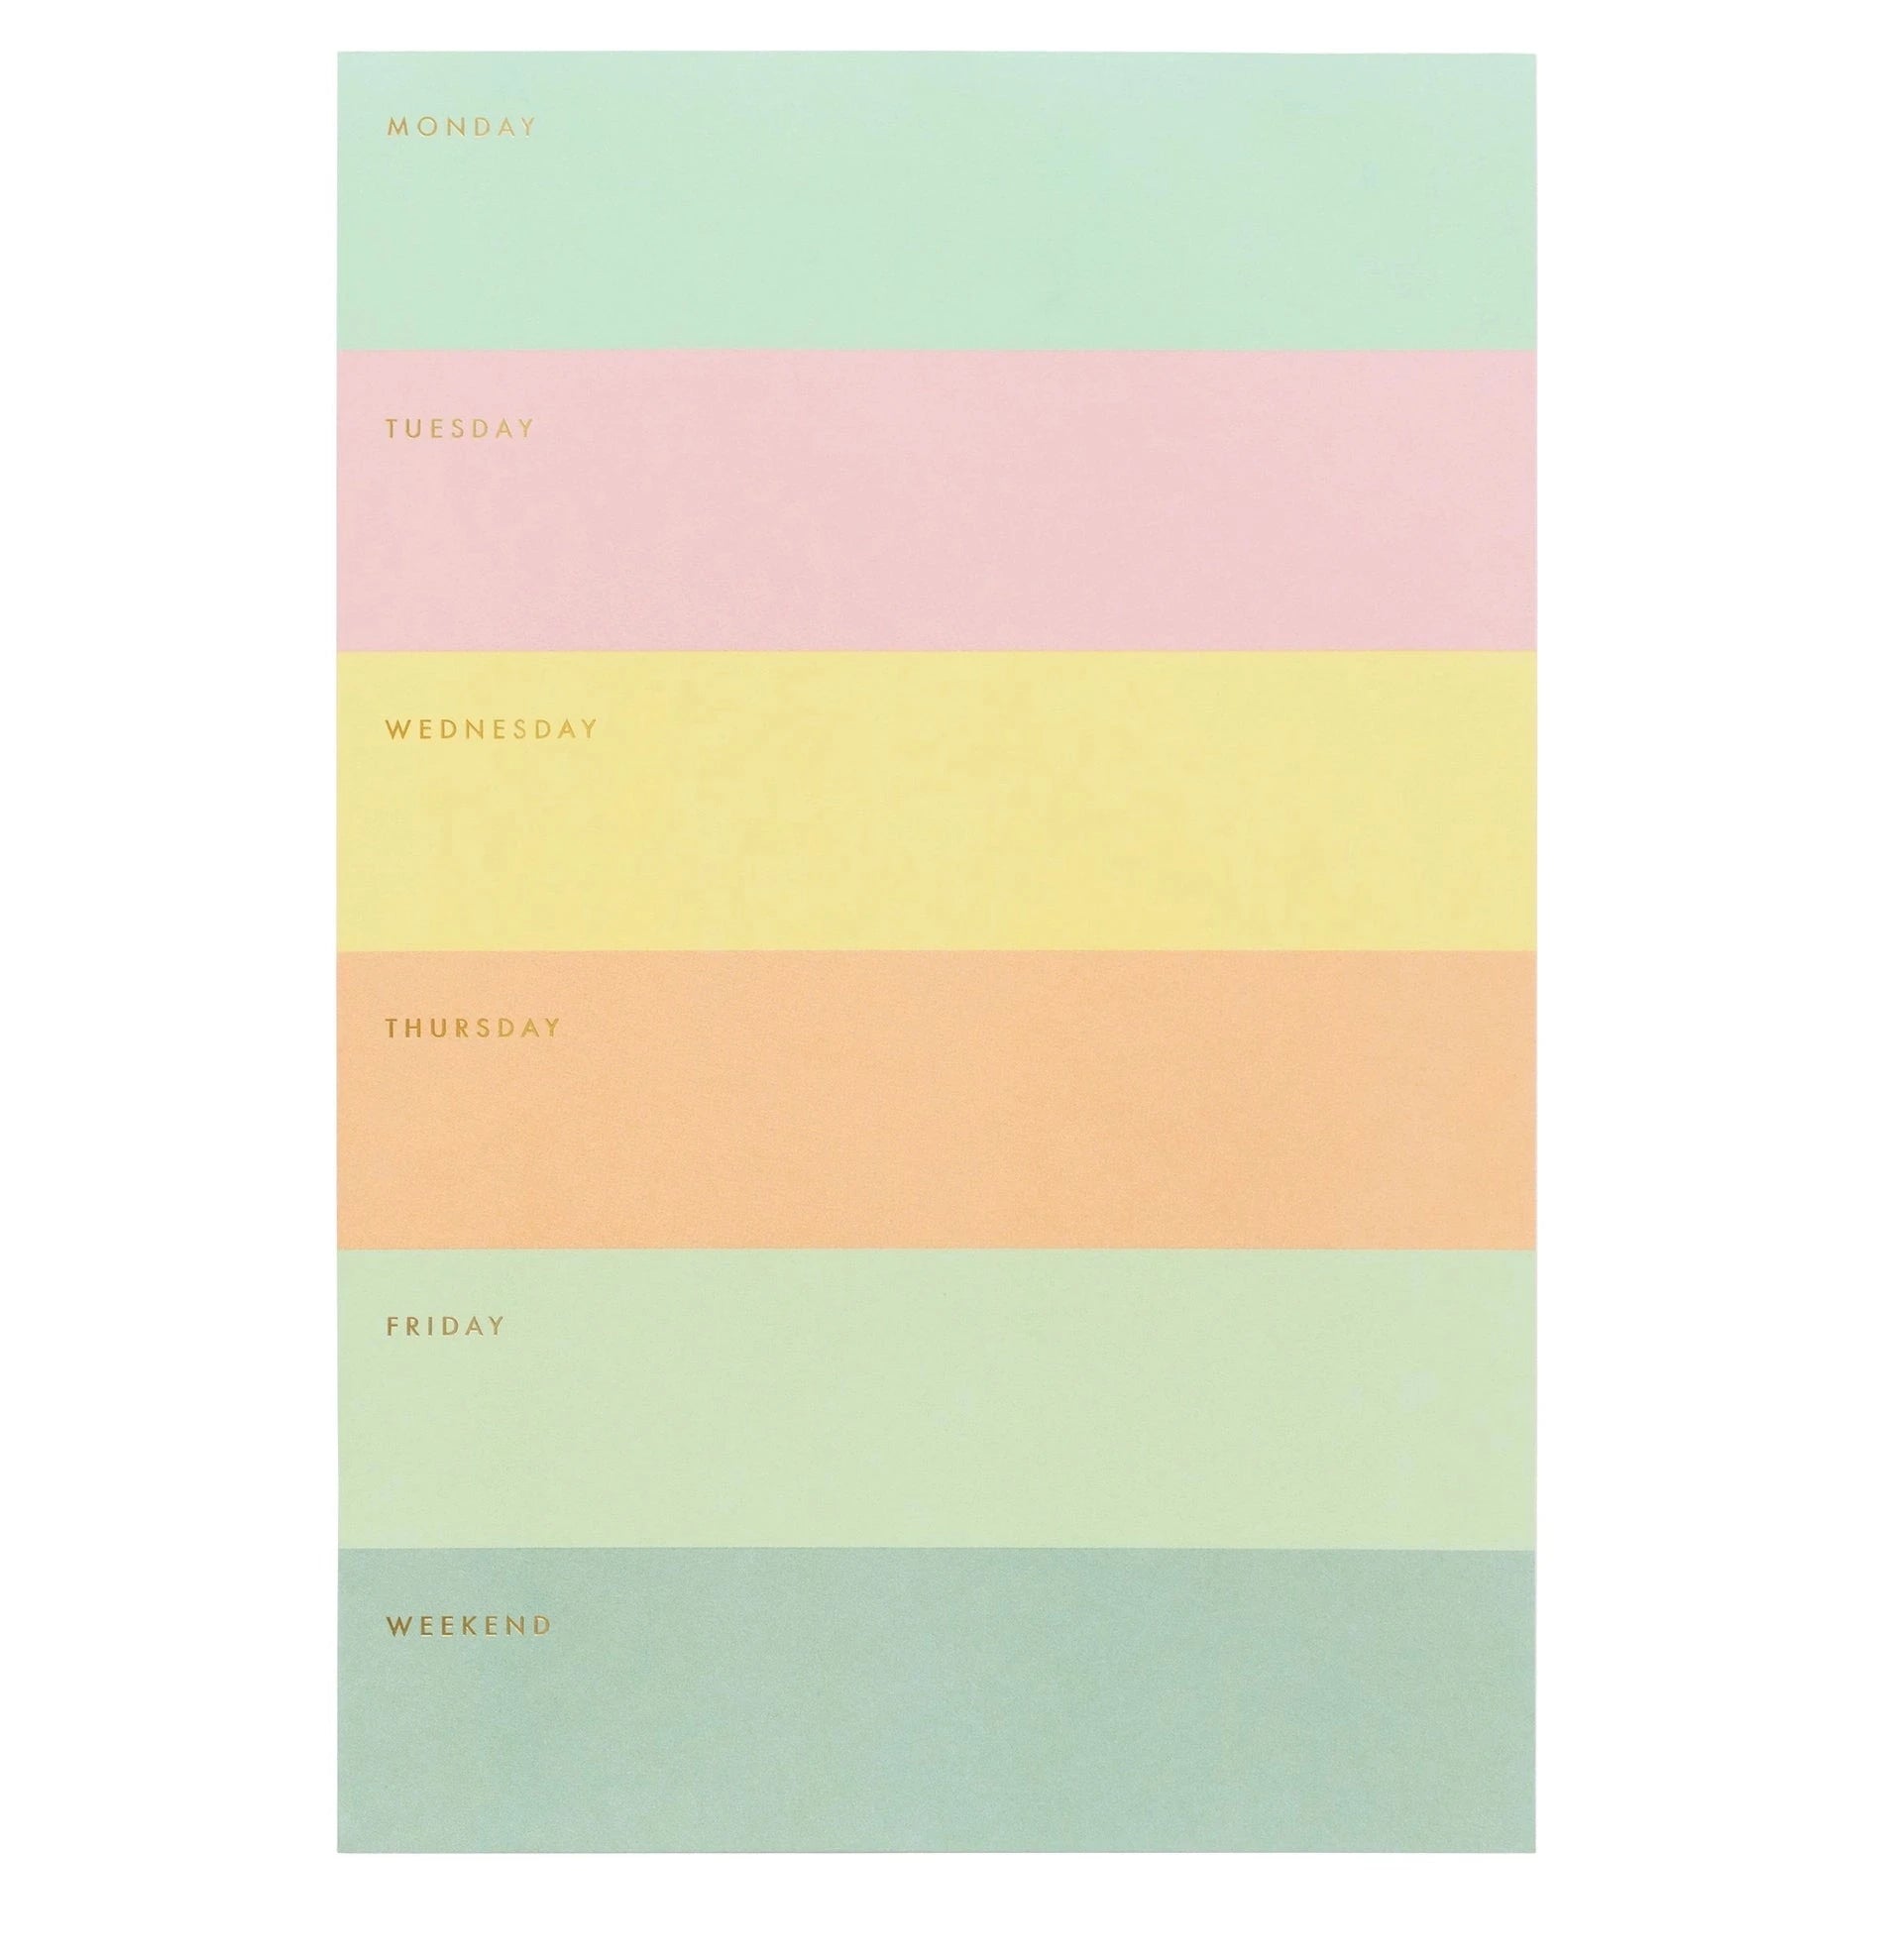 bands of pastel hues separating the days memo pad